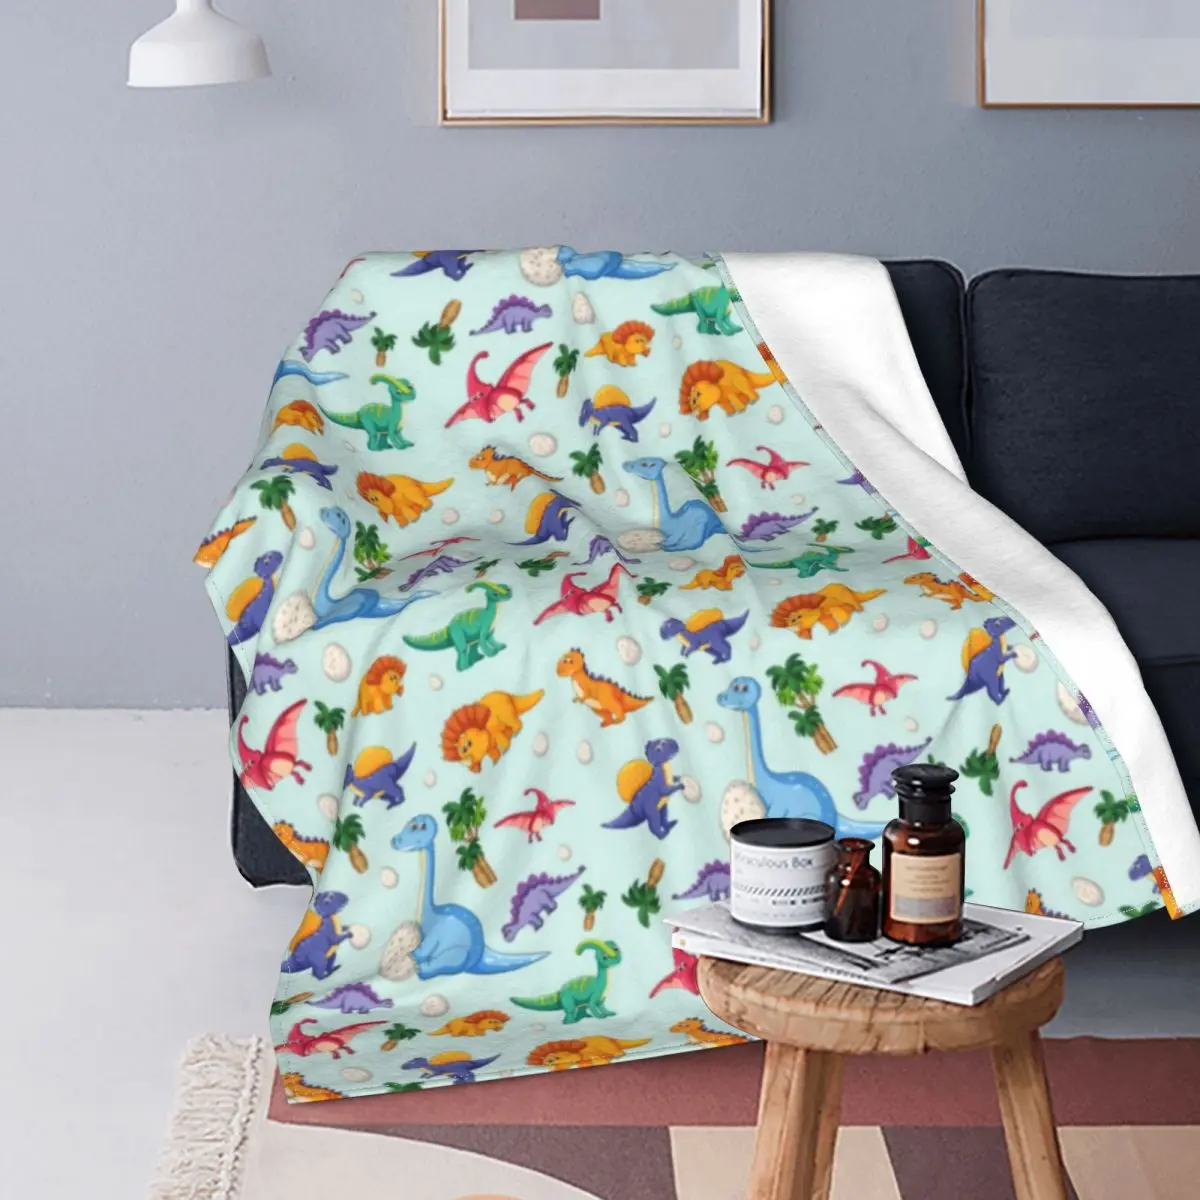 Colorful Cute Dinosaurs Blanket Cartoon Dinos Jungle For Photo Shoot Super Soft Blanket Cheap Warm Fleece Bedspread